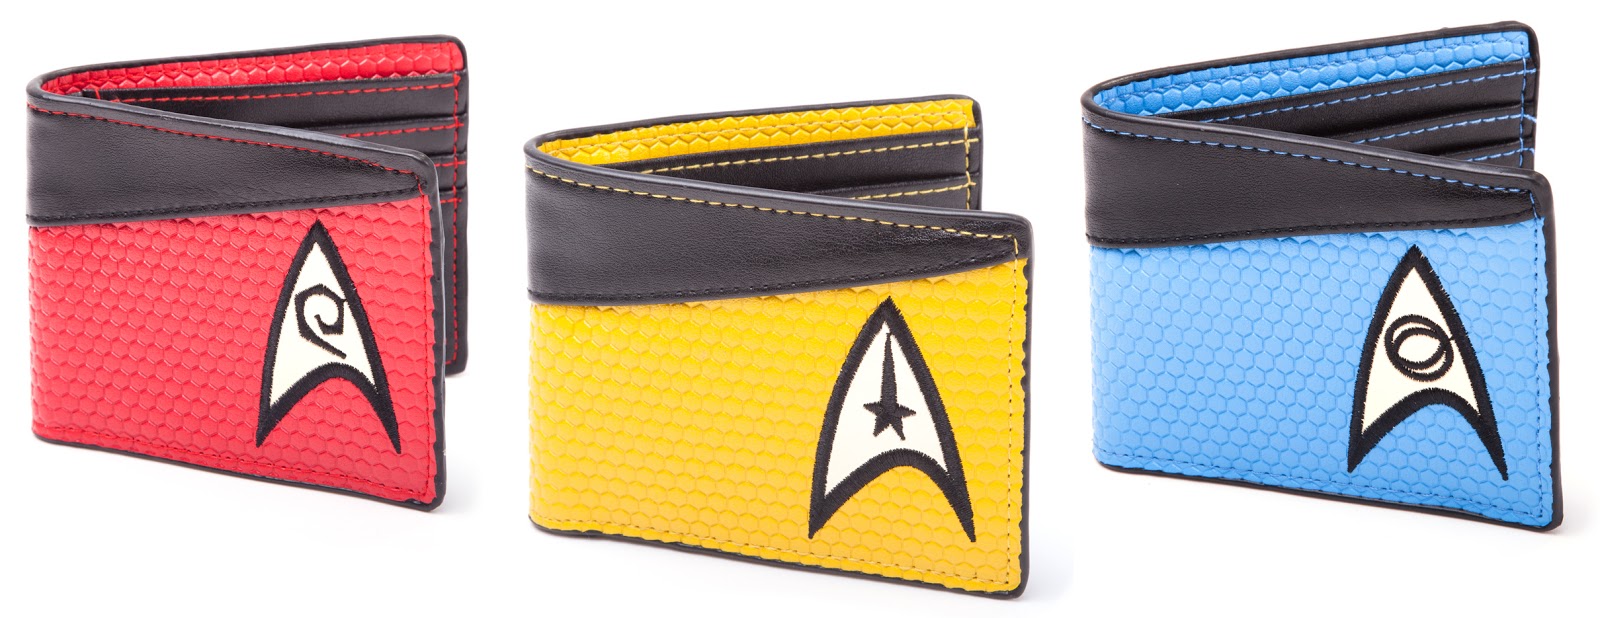 Bioworld+Star+Trek+TOS+Starfleet+uniform+wallets.jpg